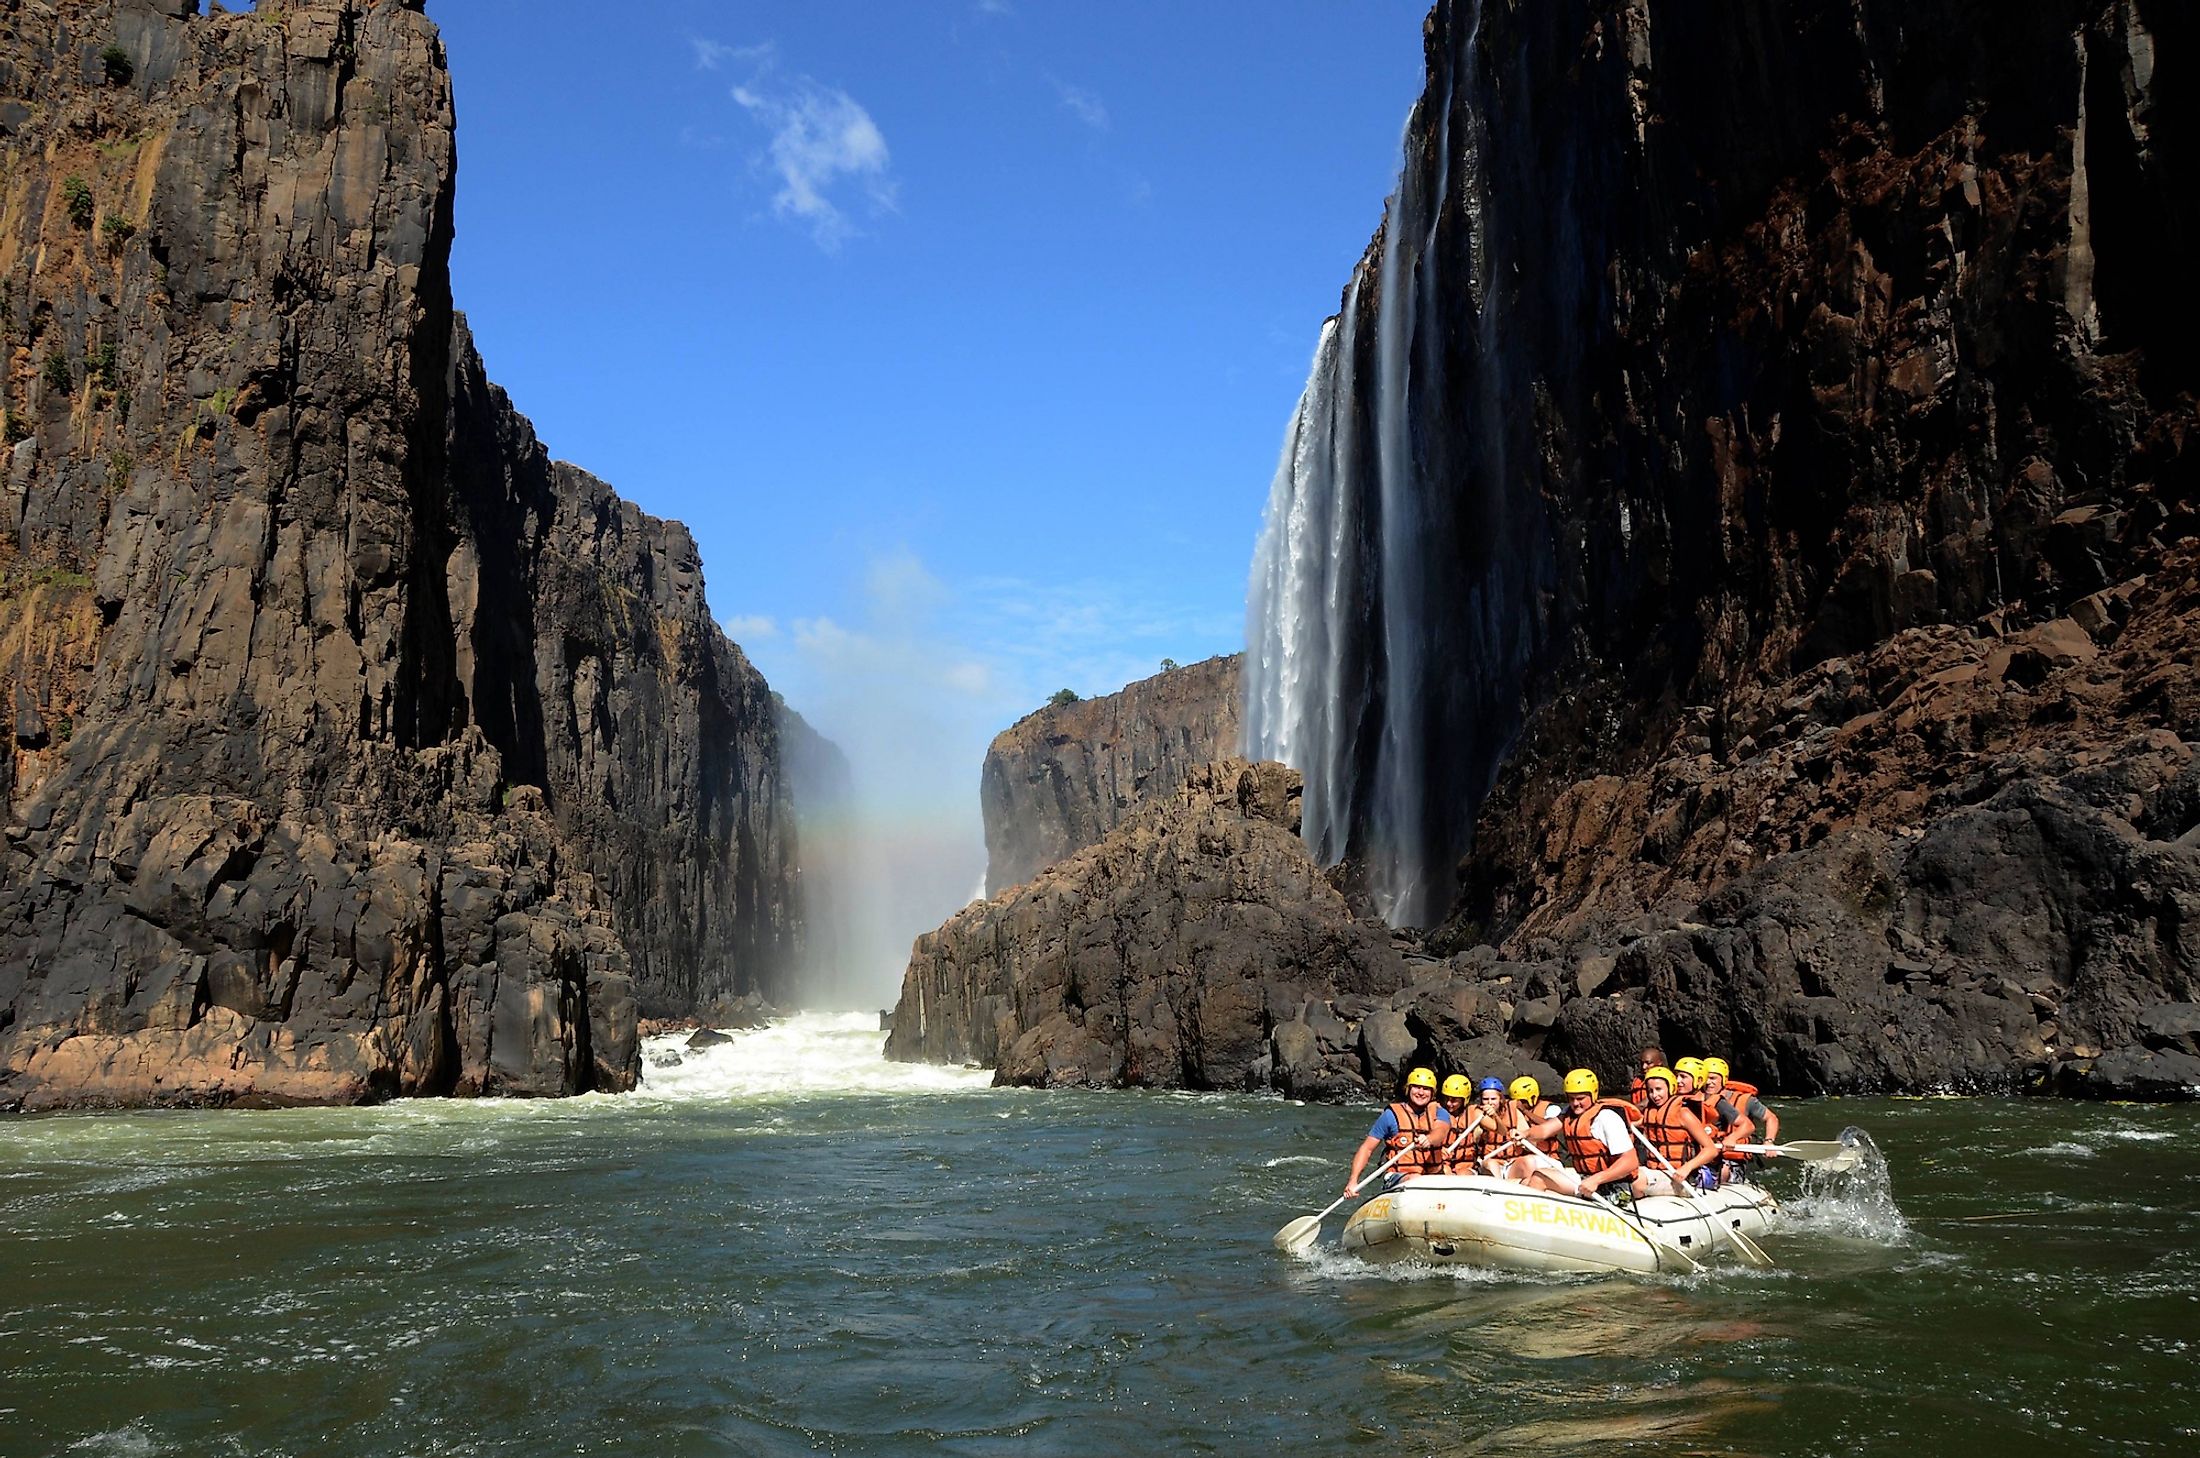 Zambezi River rafting. Editorial credit: cordelia bua / Shutterstock.com